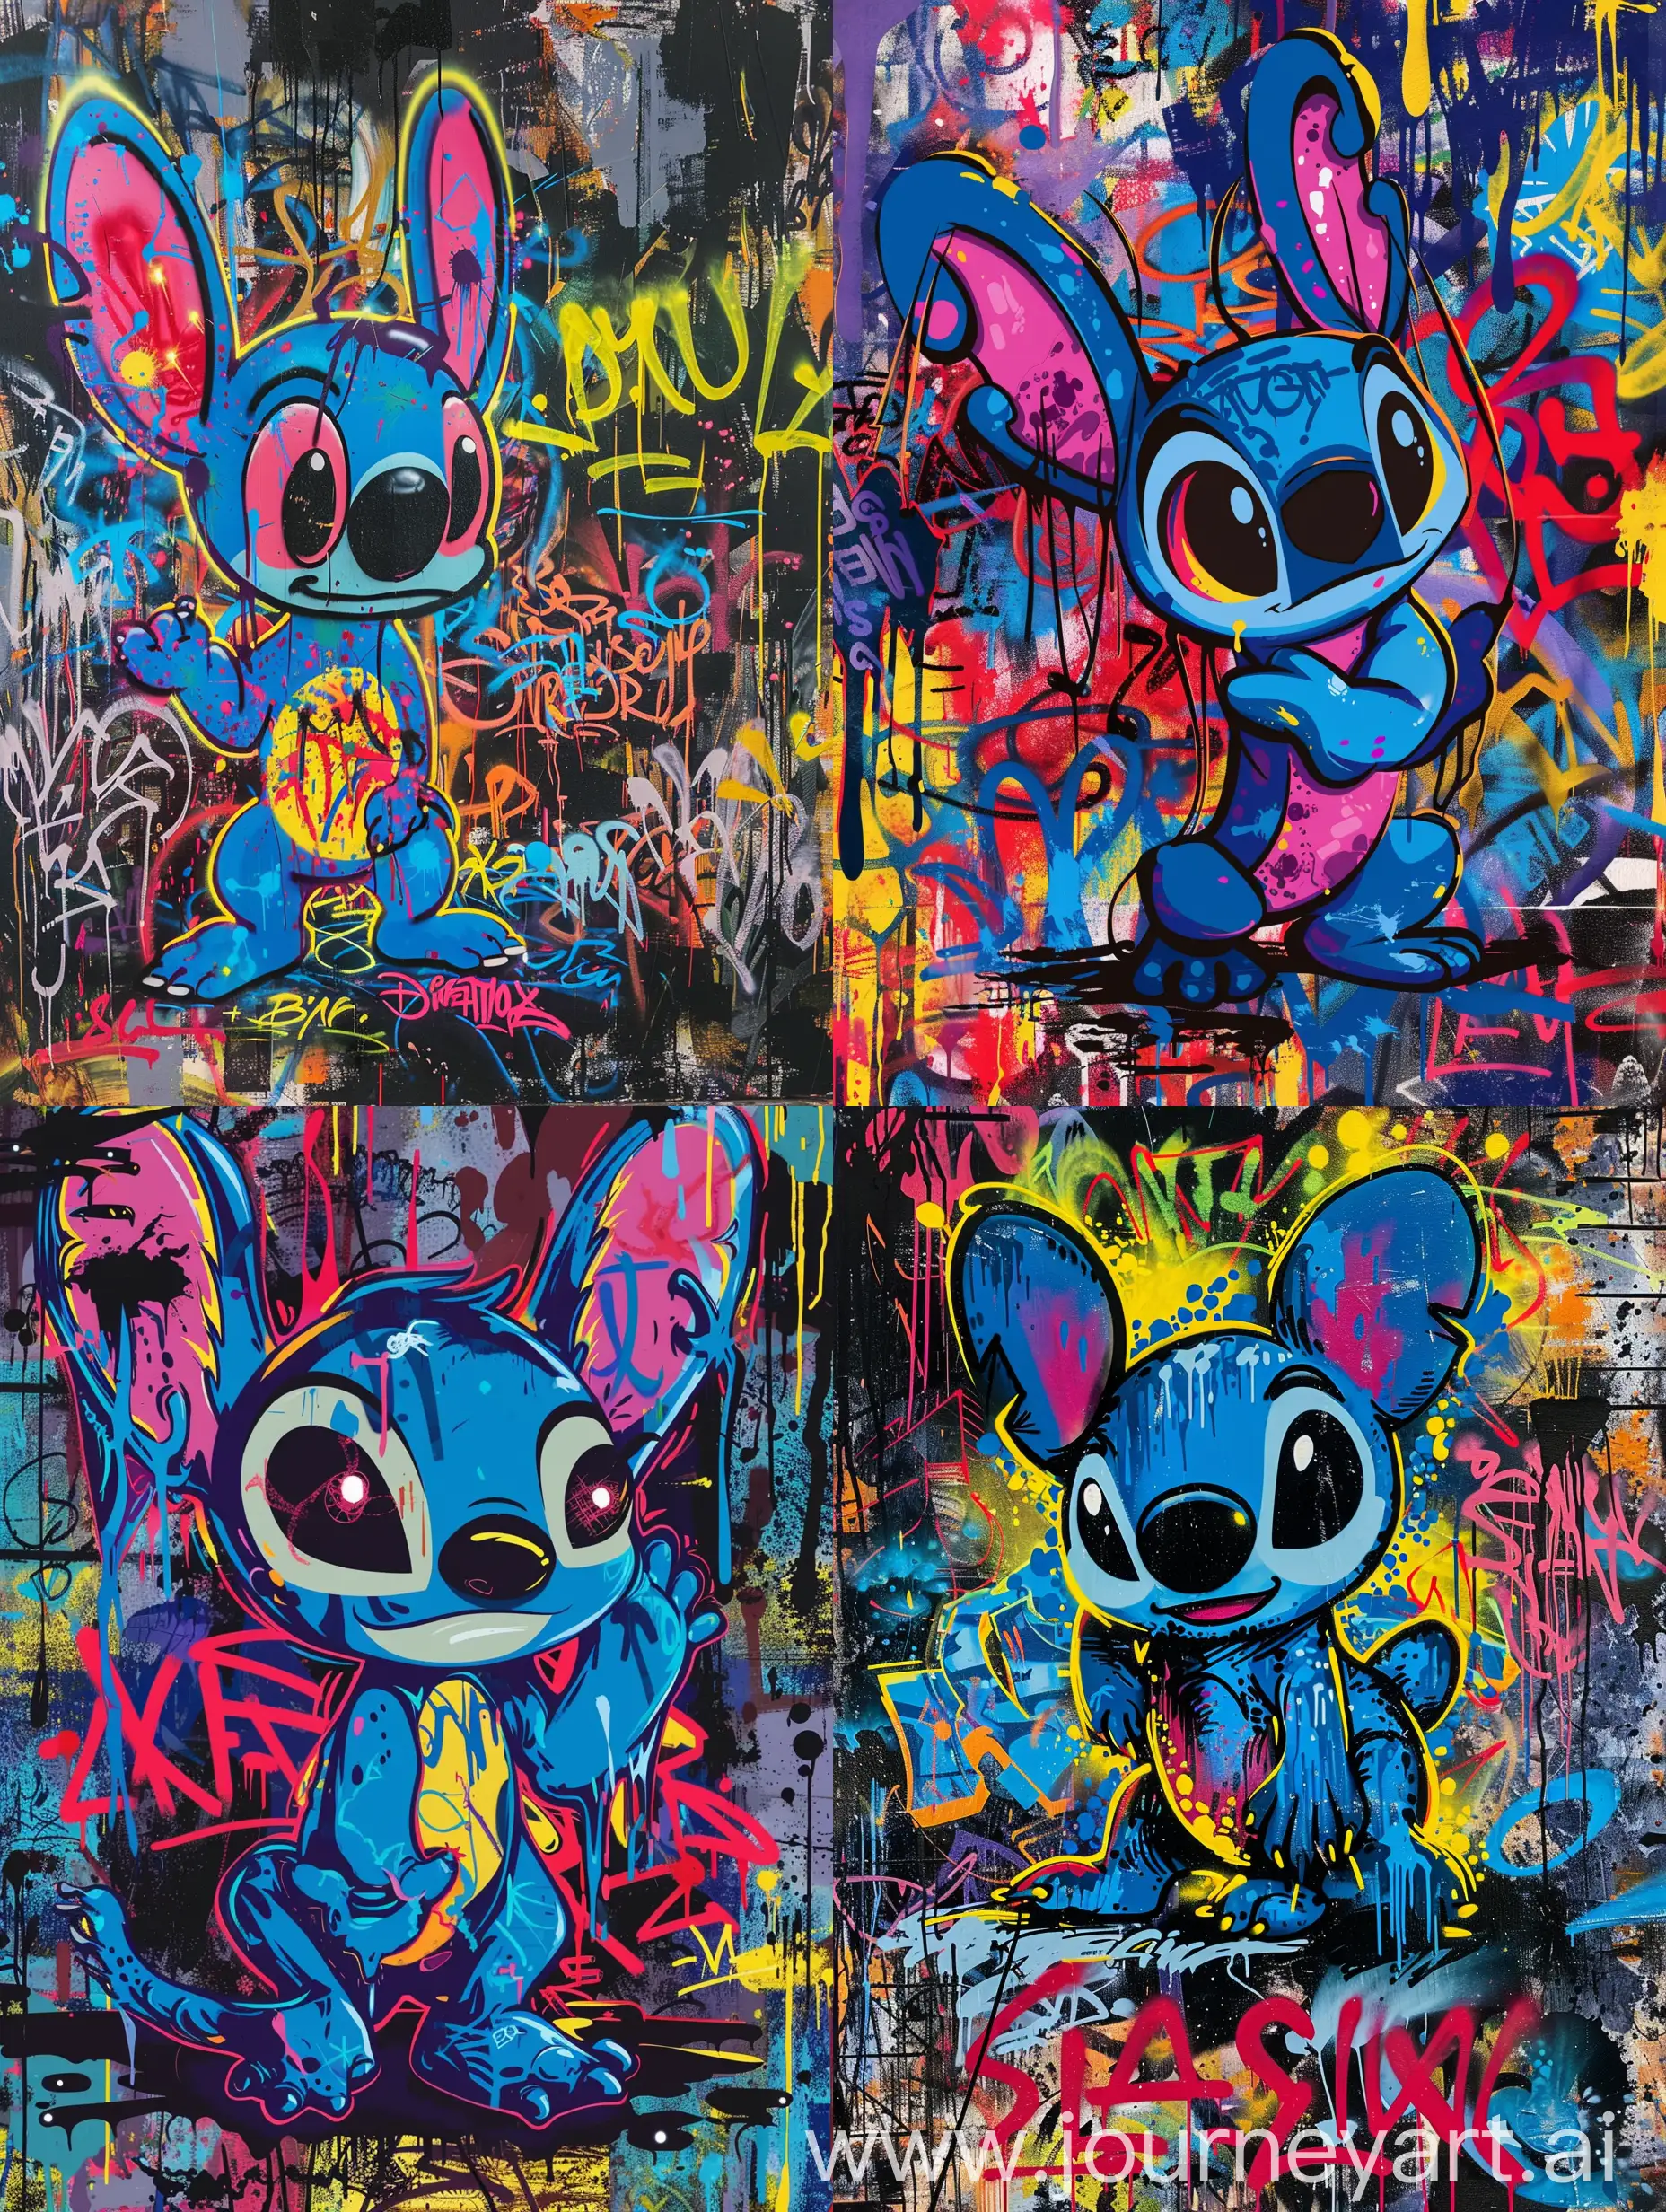 Vibrant-Graffiti-Illustration-of-Stitch-in-Urban-Setting